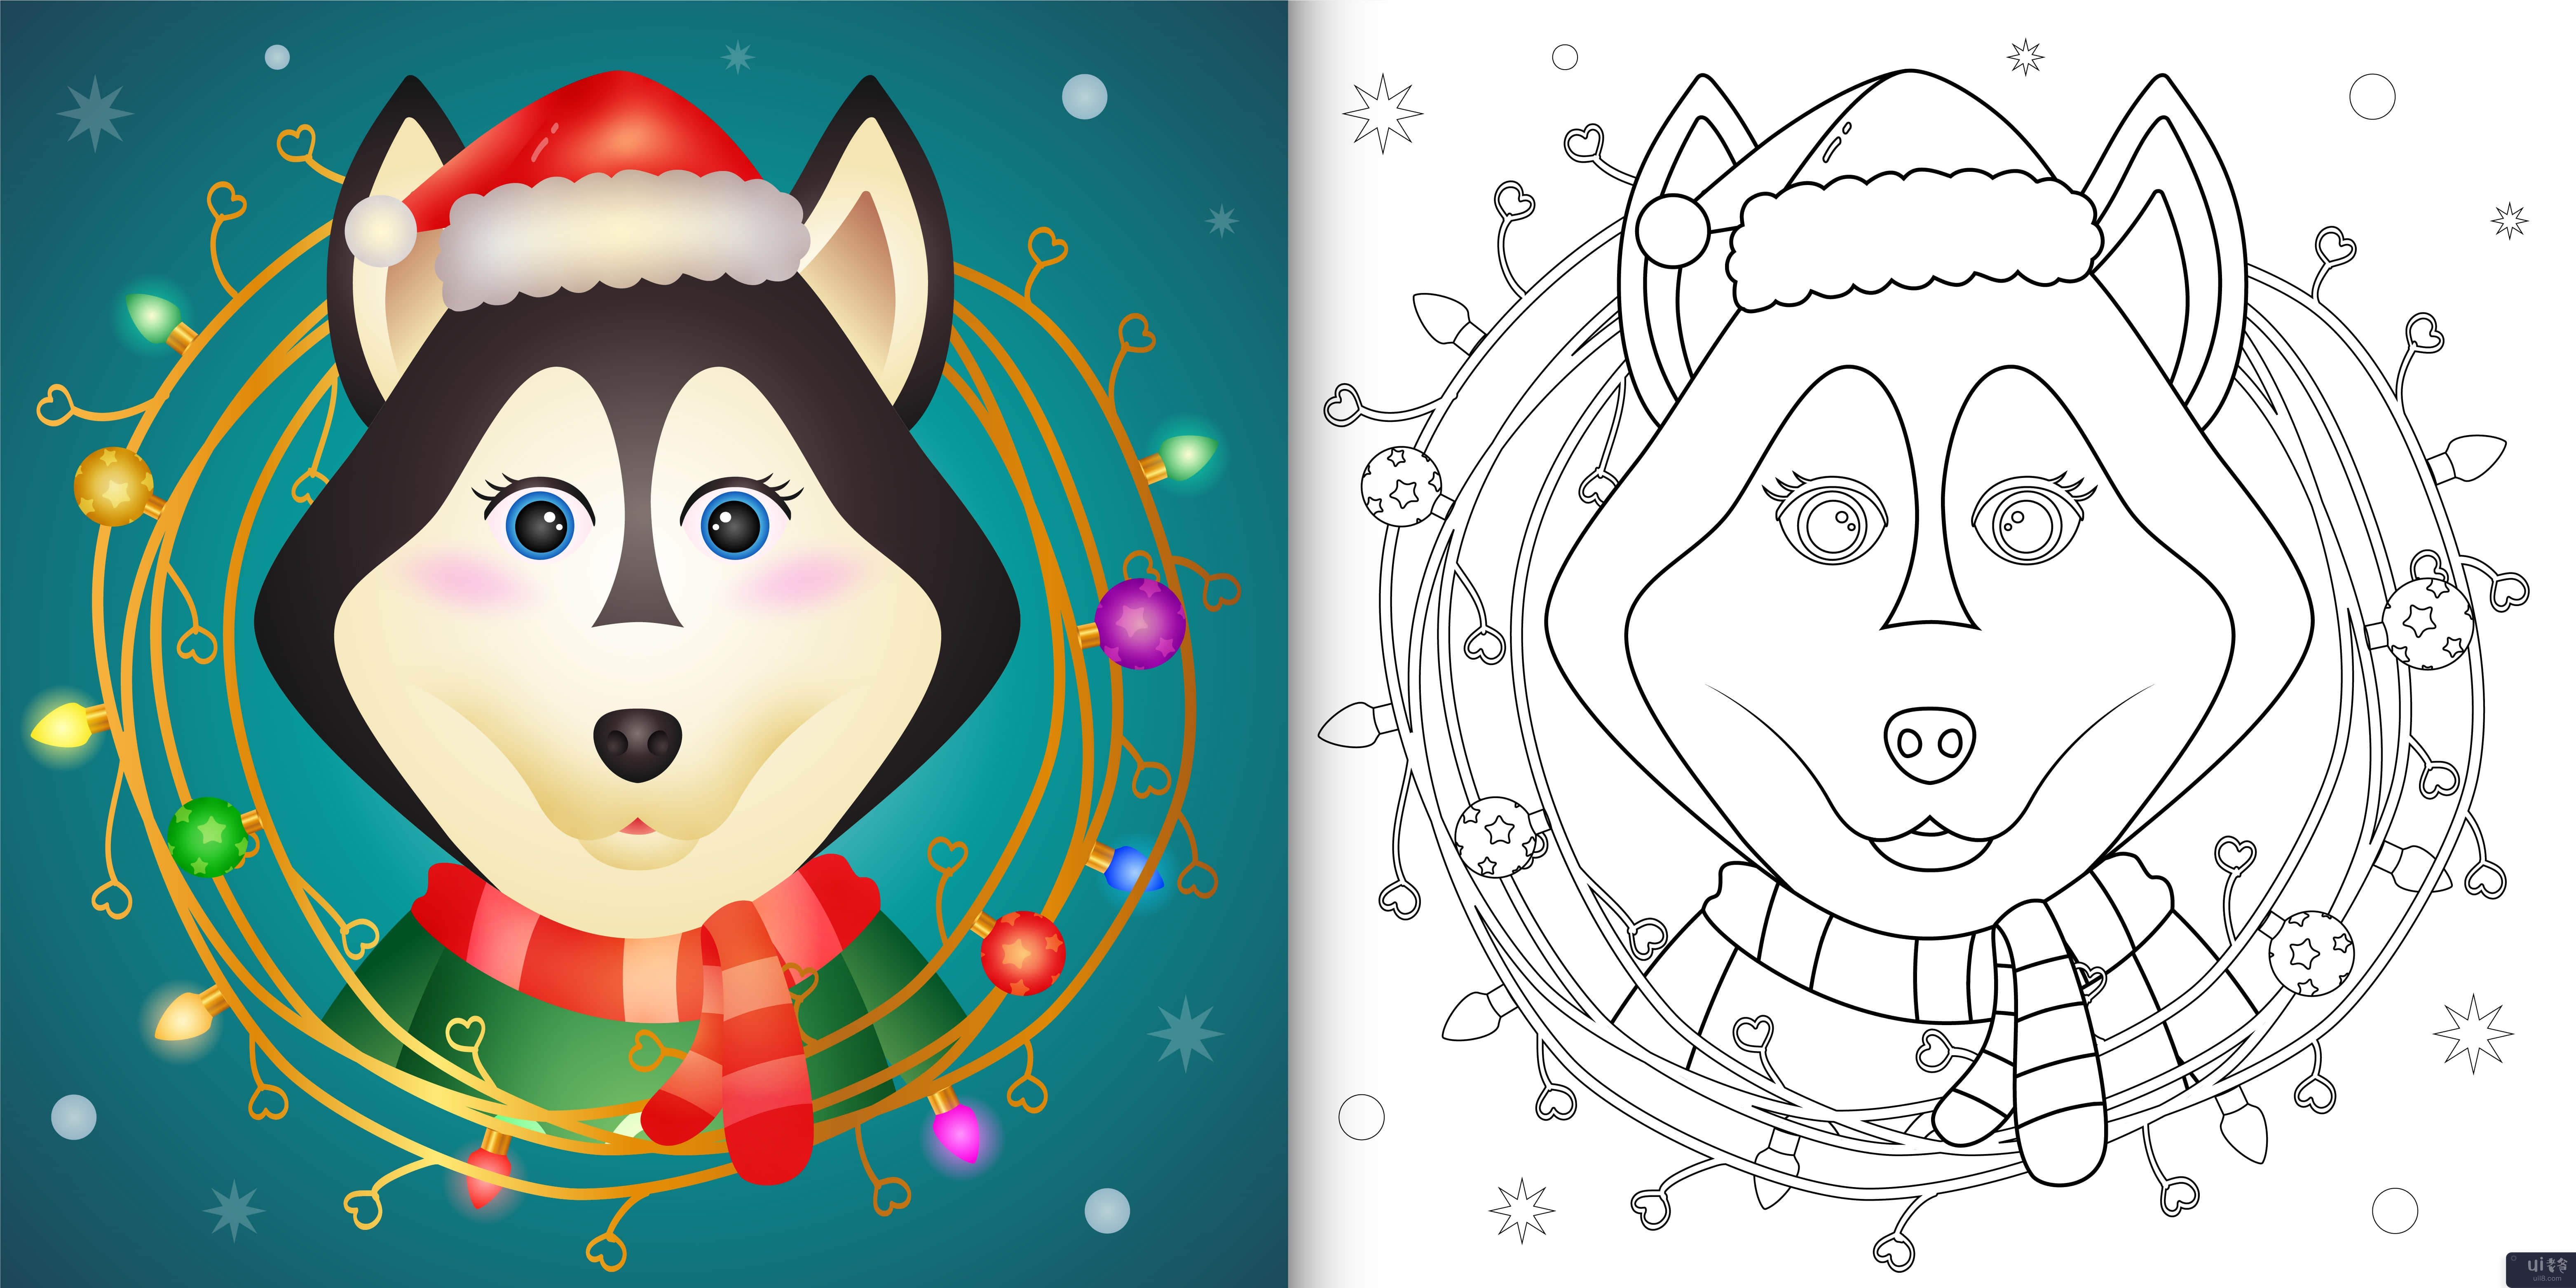 用树枝装饰的可爱哈士奇狗着色书(coloring book with a cute husky dog with twigs decoration)插图2